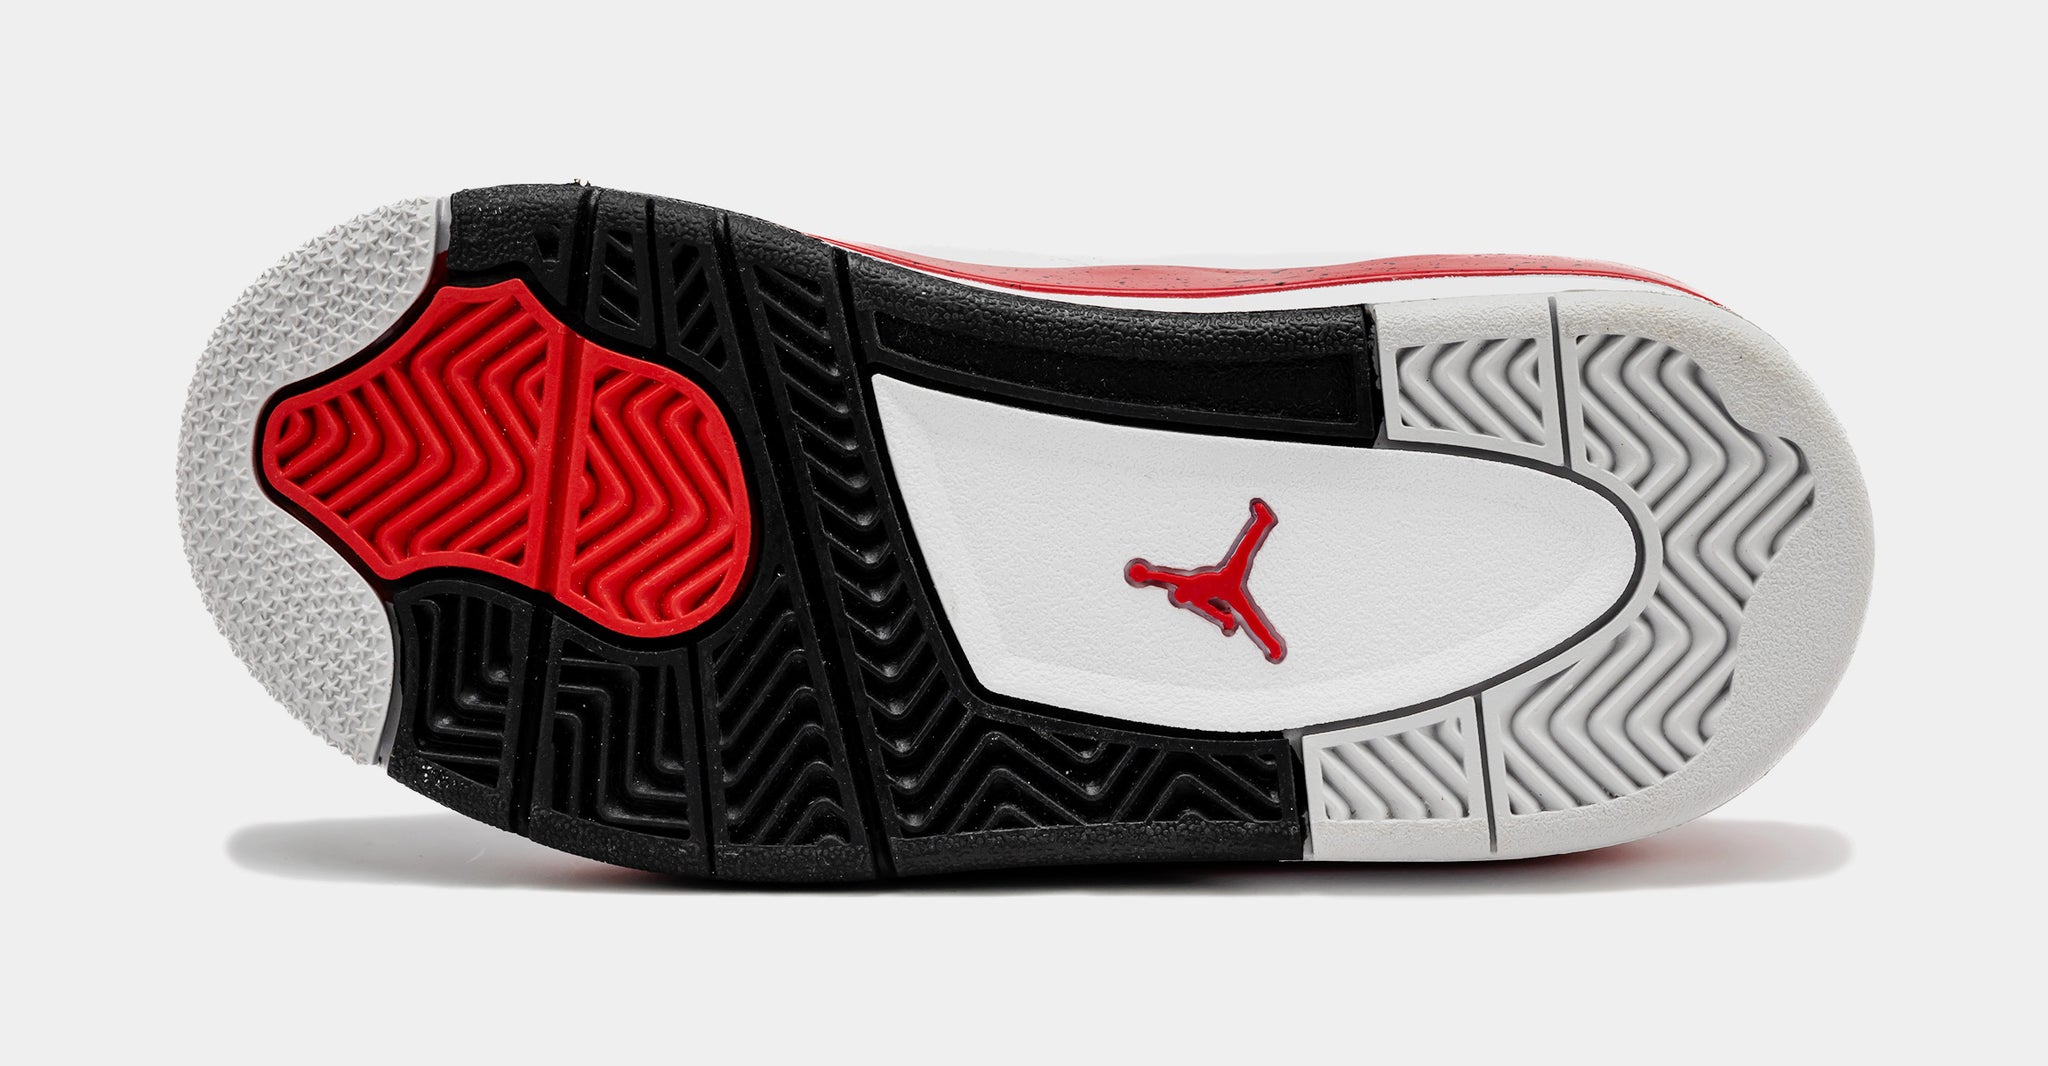 Jordan Air Jordan 4 Retro Red Cement Mens Lifestyle Shoes White